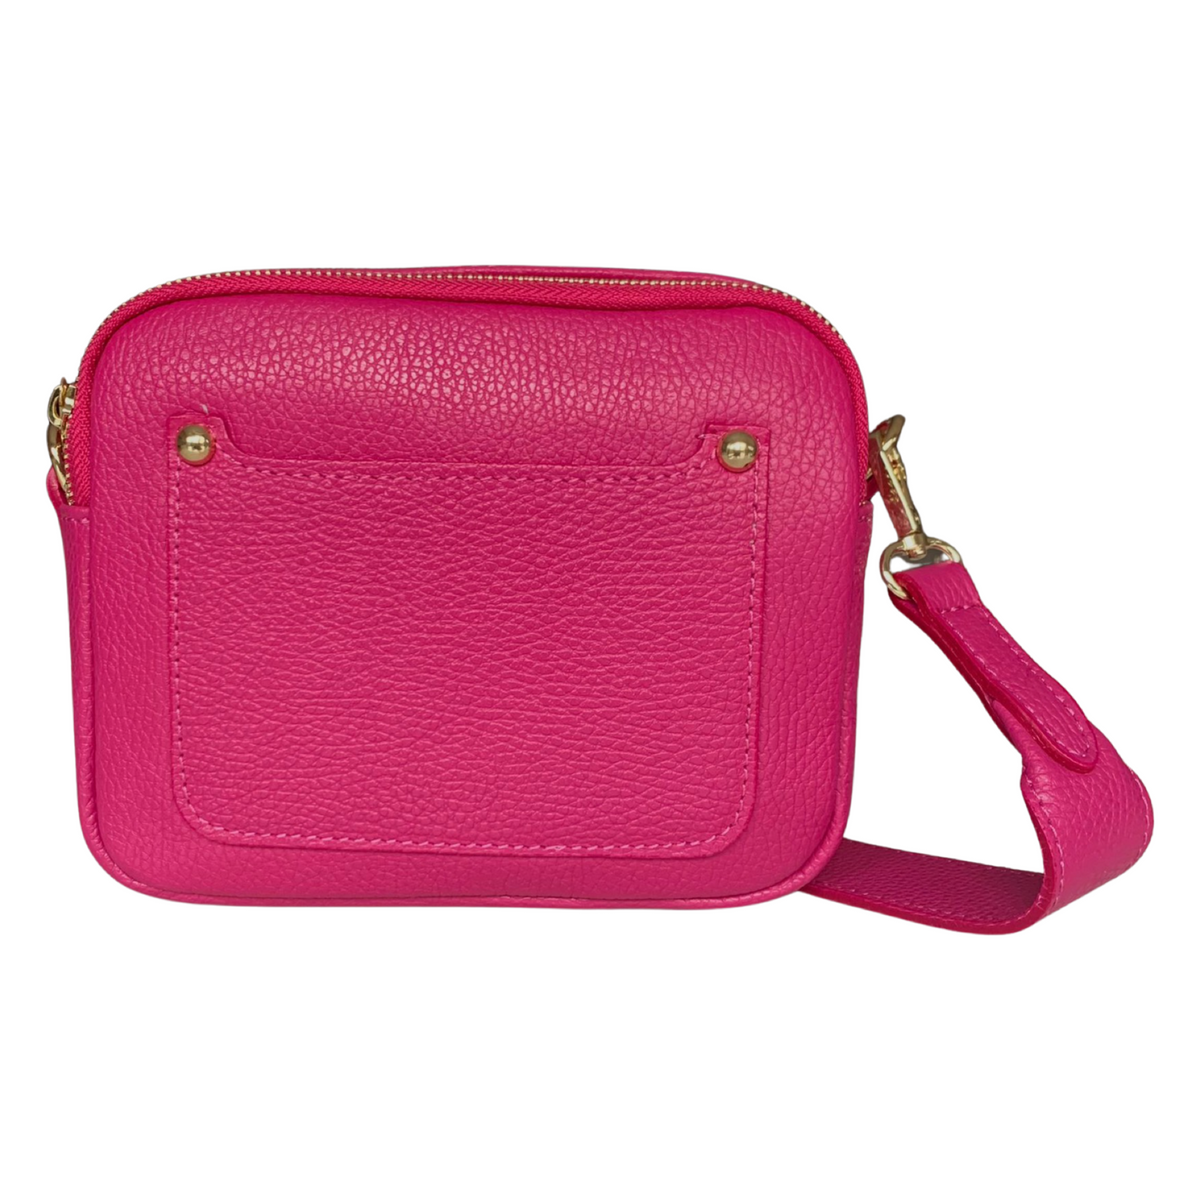 Zara Leather Crossbody Bag - Fuchsia Pink